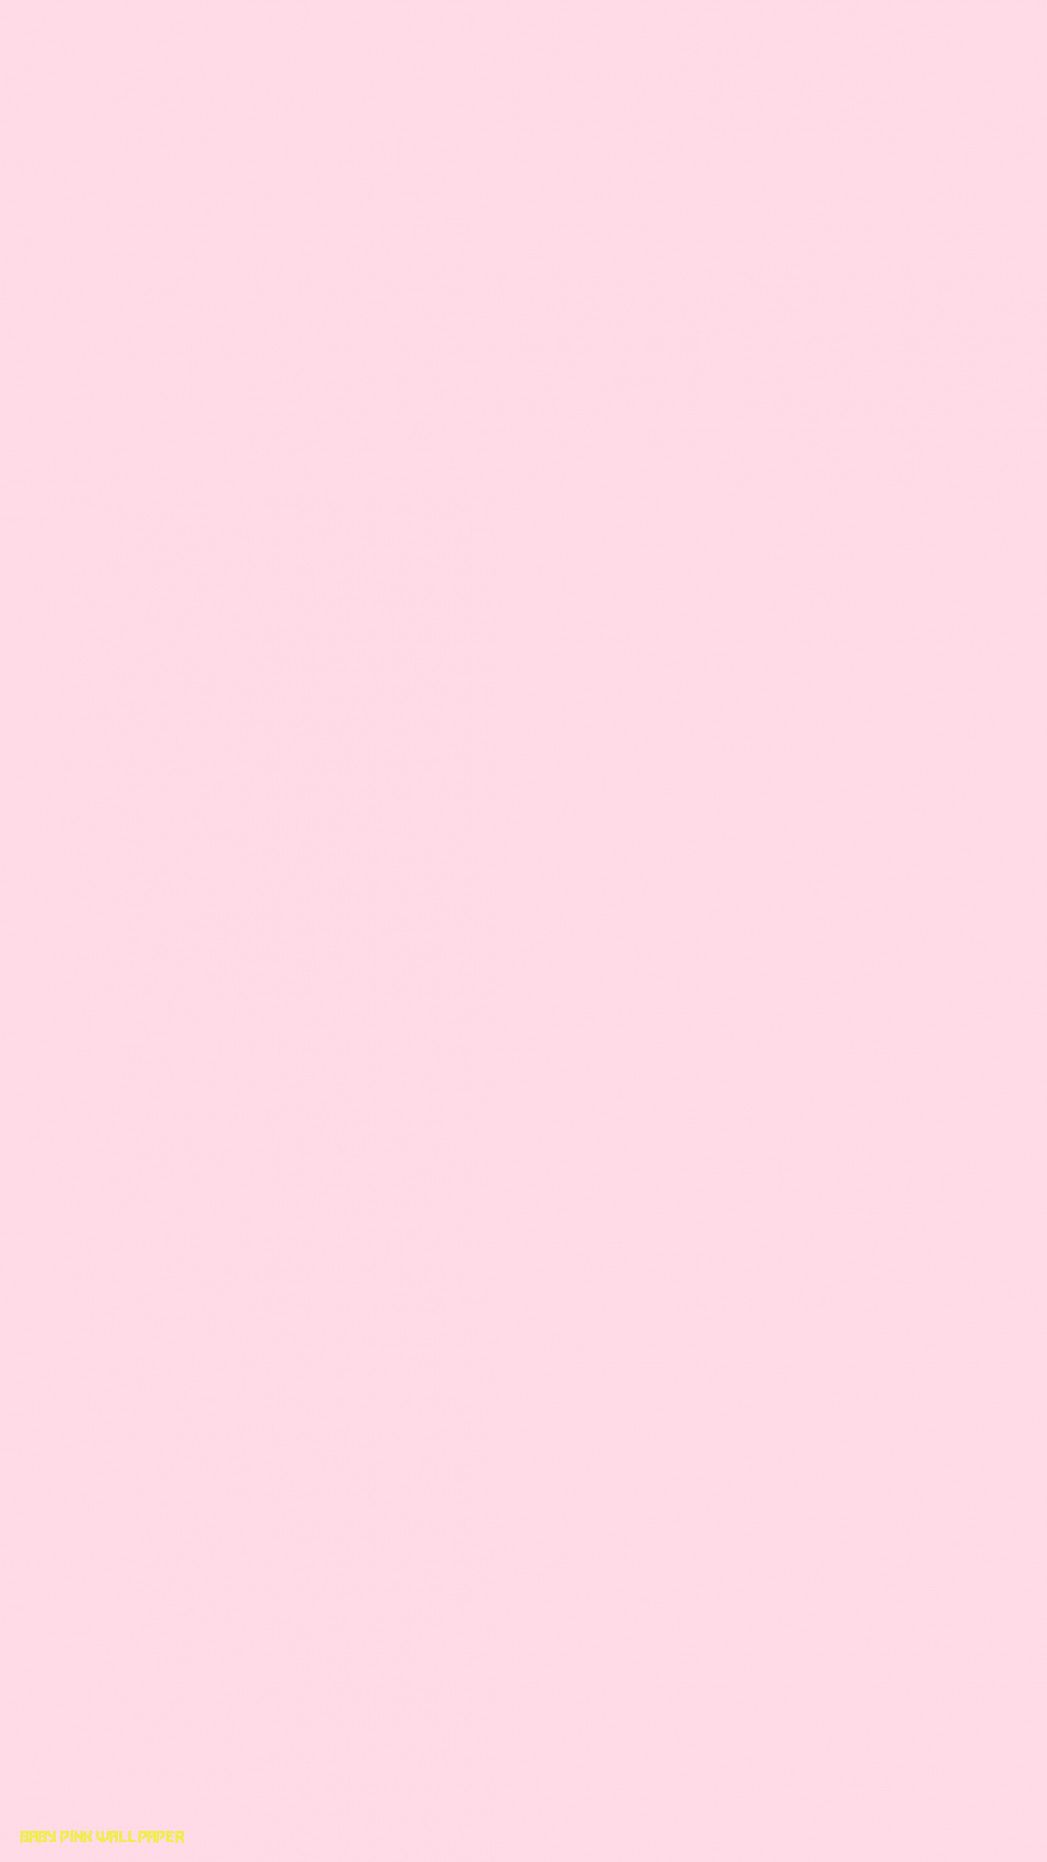 Plain baby pink wallpaper. iPhone Wallpaper